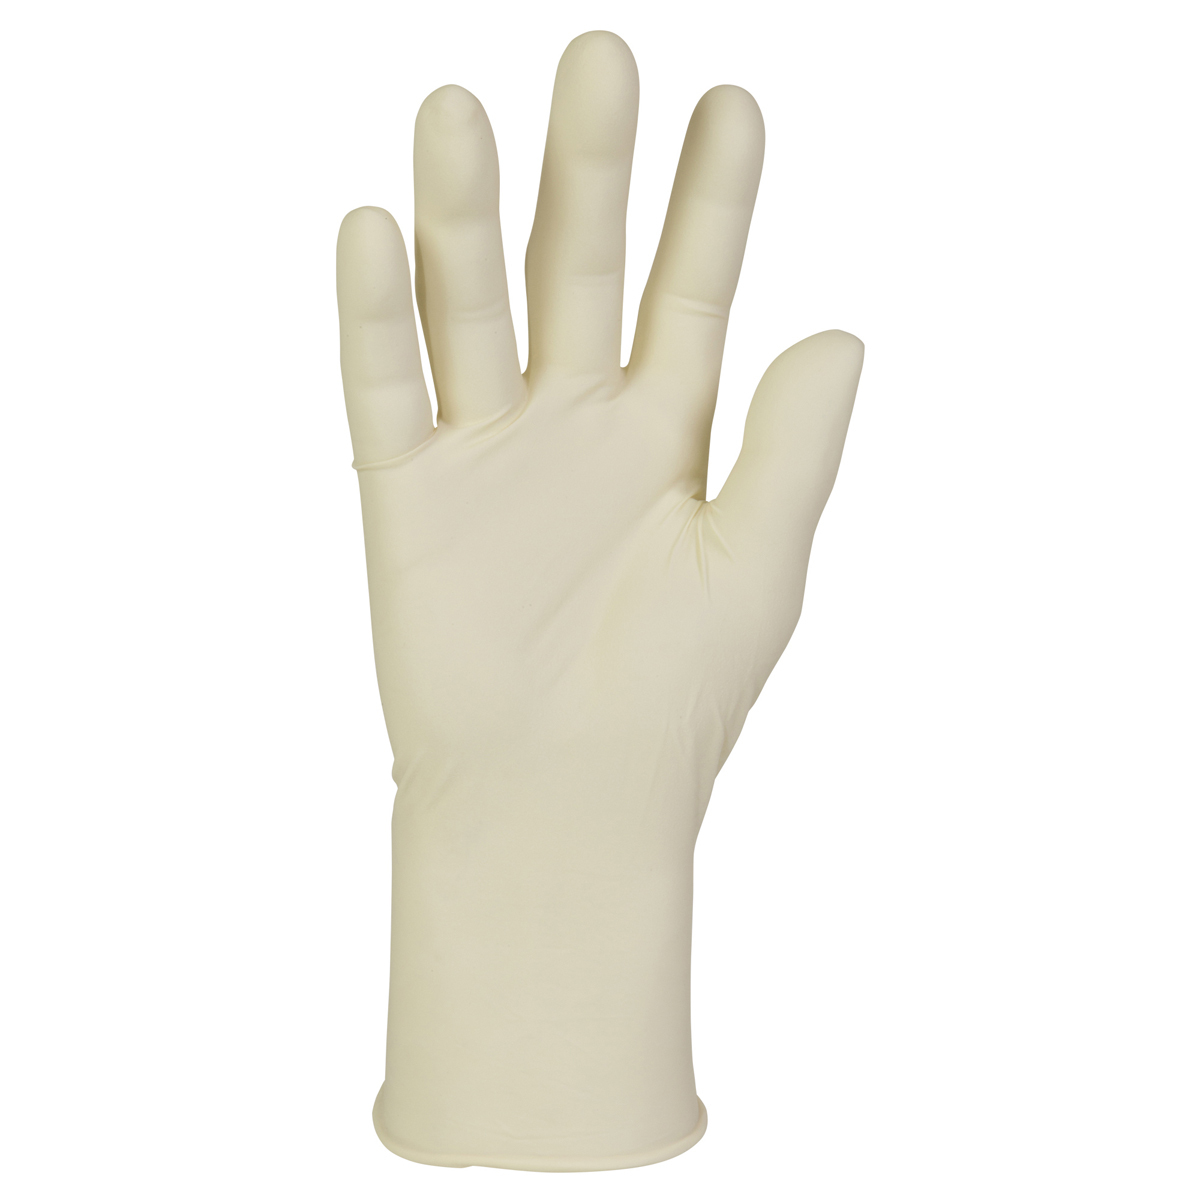 Kimberly-Clark Professional* Small Natural 6.7 mil PFE Latex Powder-Free Disposable Exam Gloves (100 Gloves Per Box) (Availabili